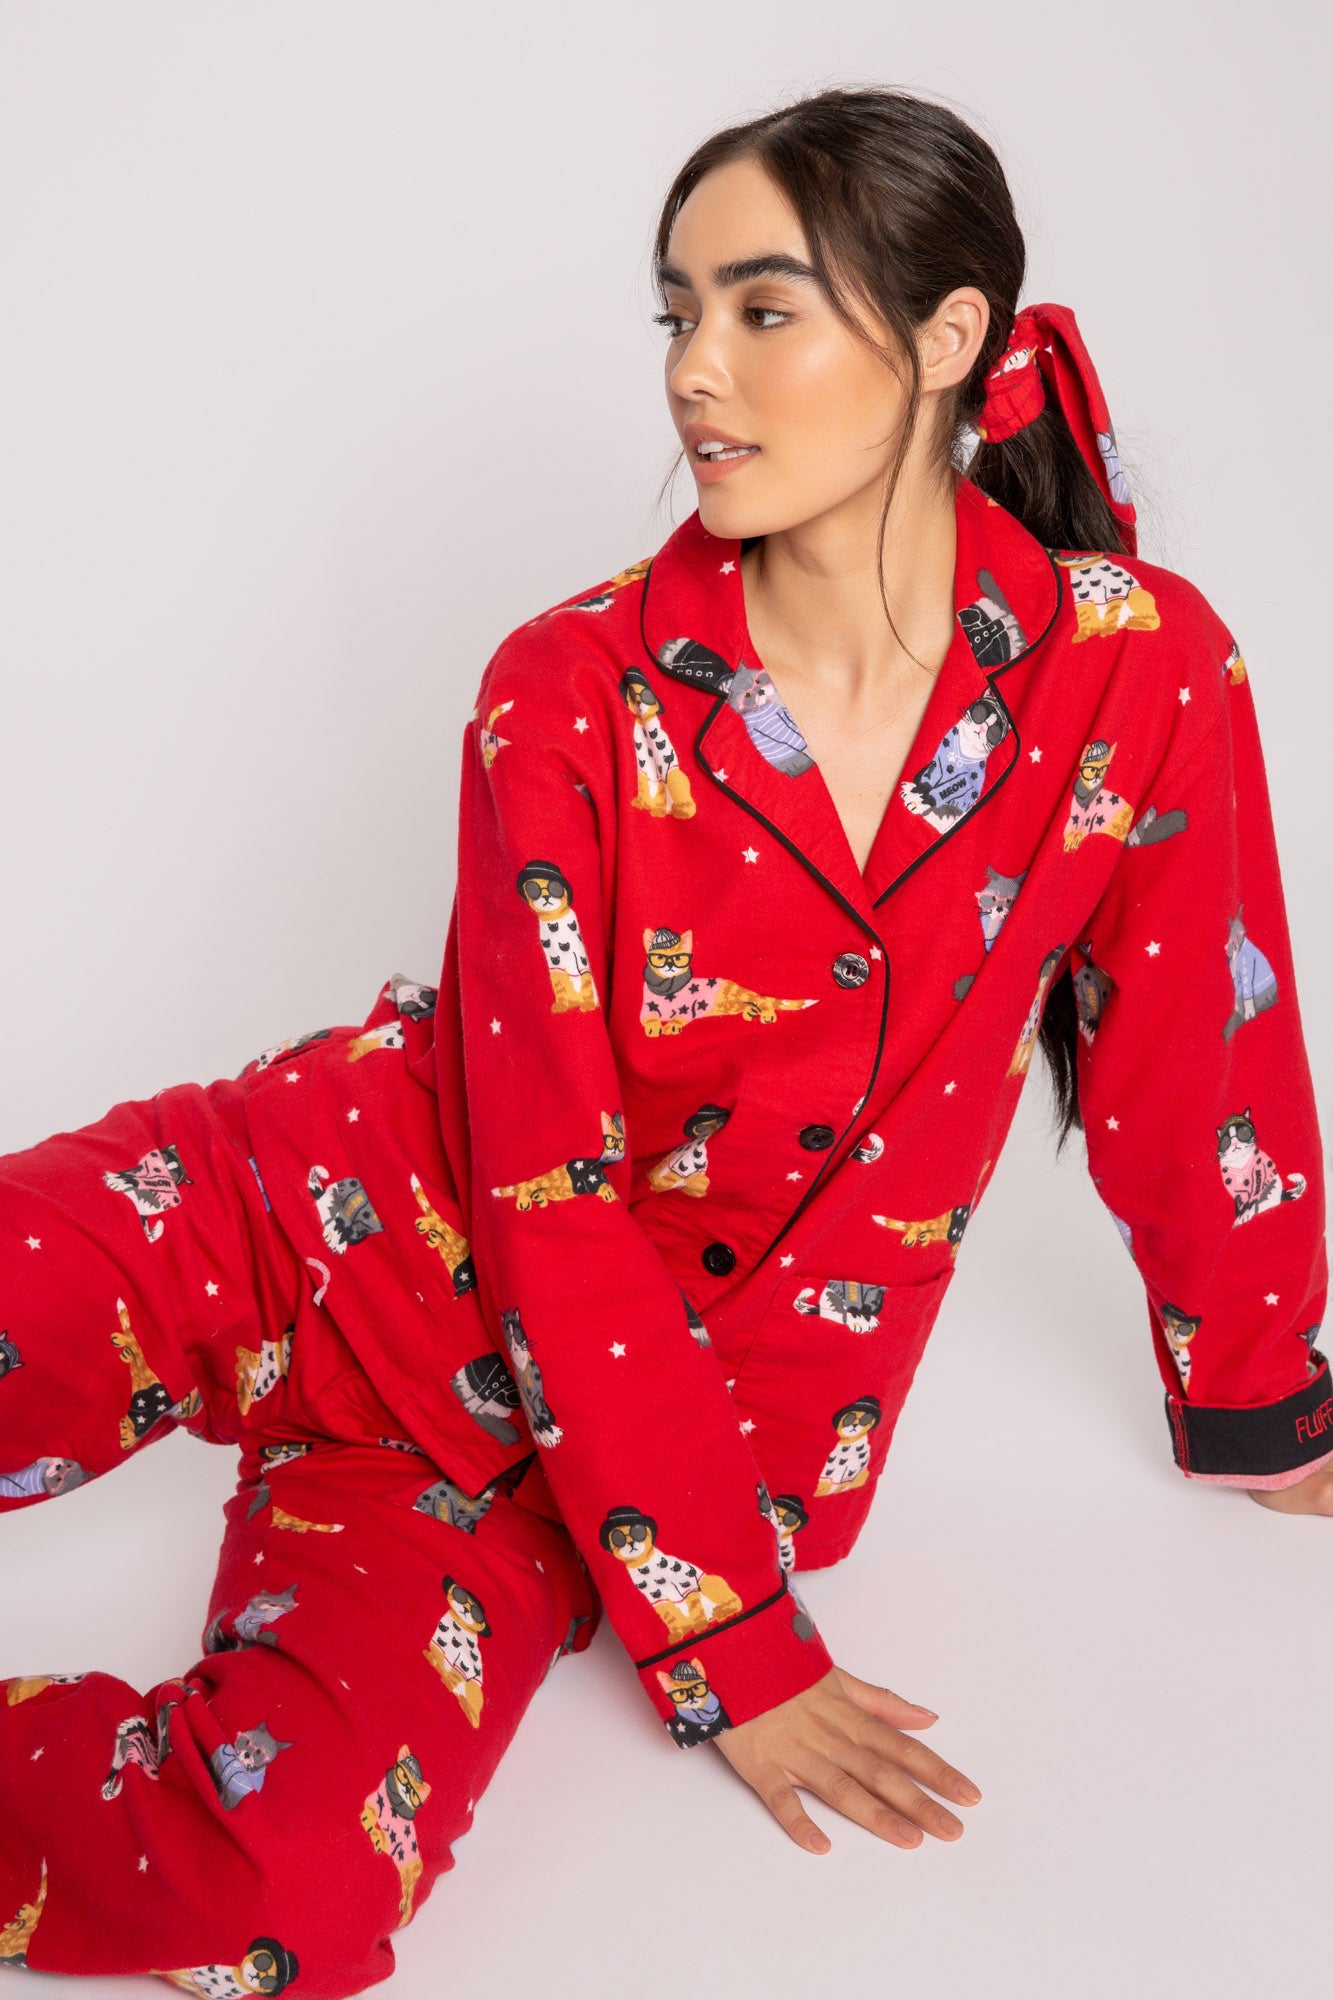 PJ Salvage Stay Cozy Classic Flannel Pajama Set